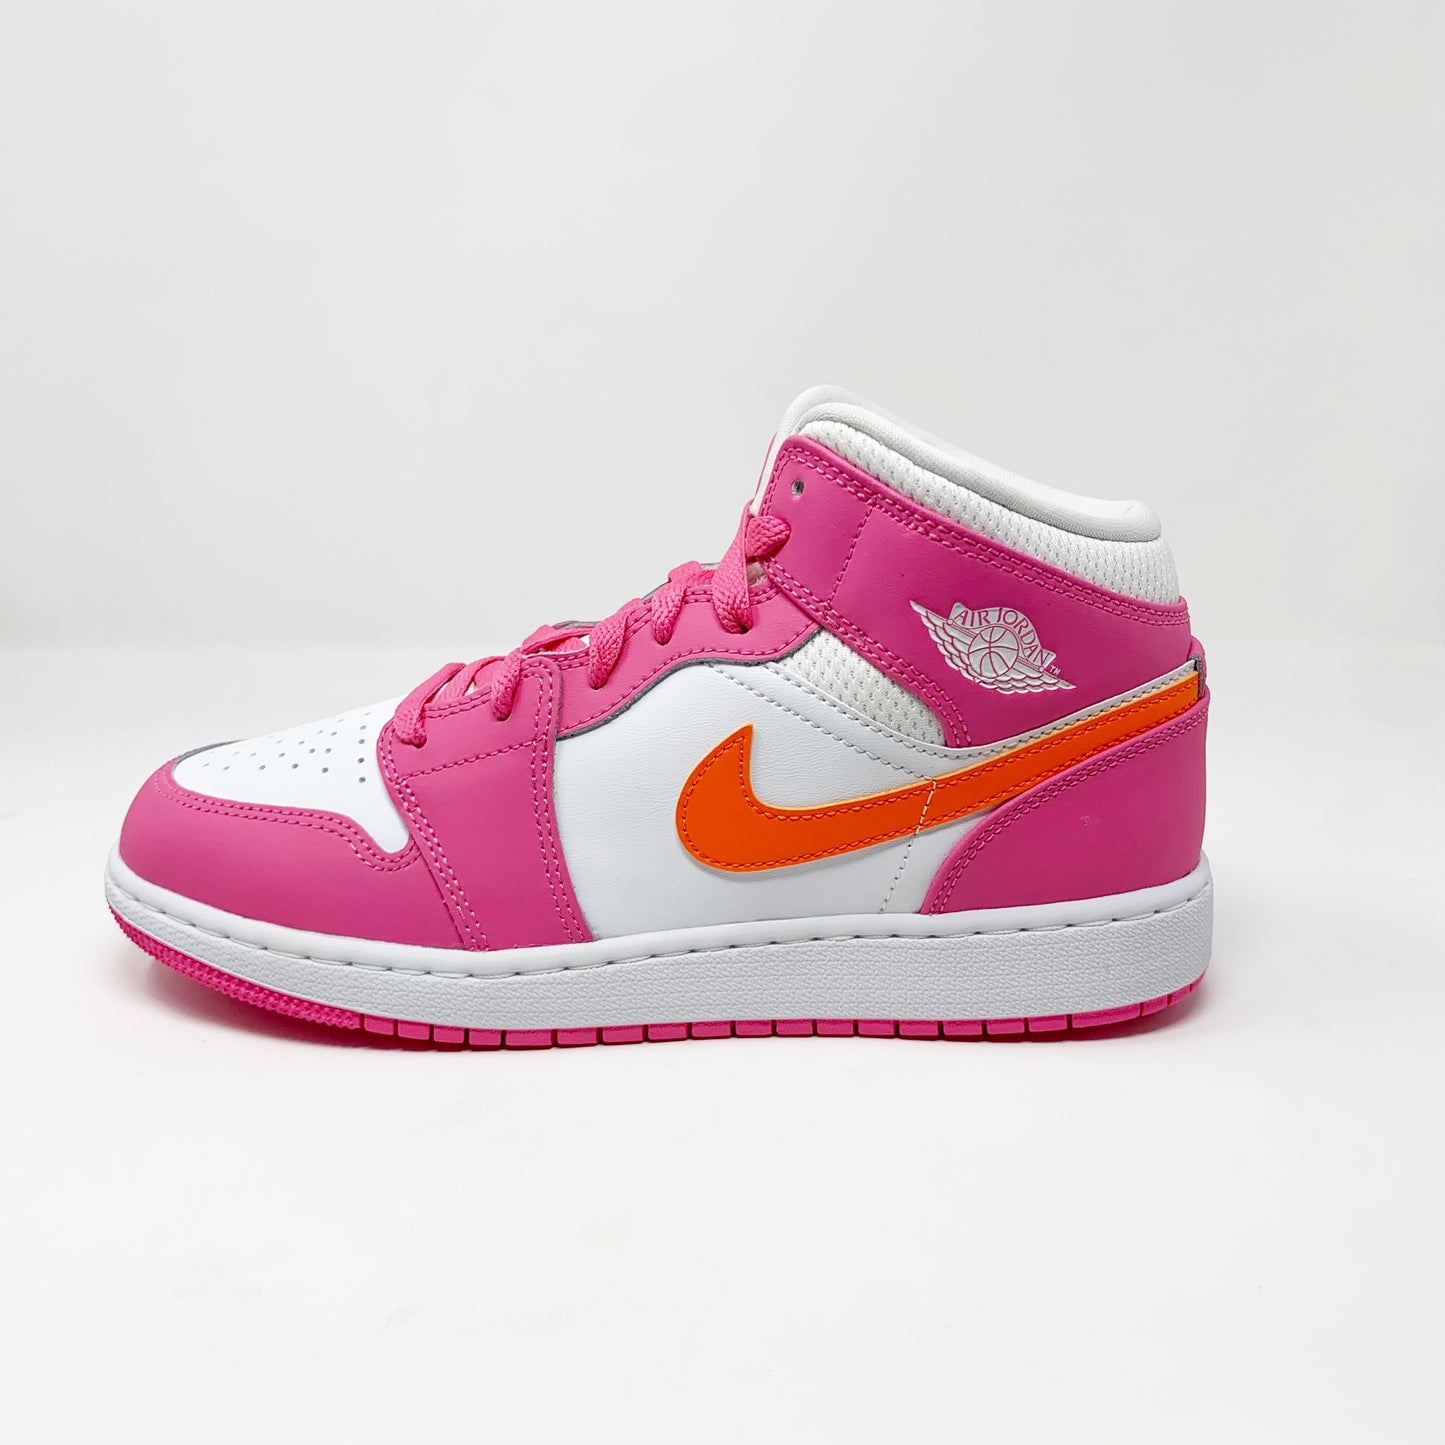 Jordan 1 Mid “Pinksickle Orange” (GS)